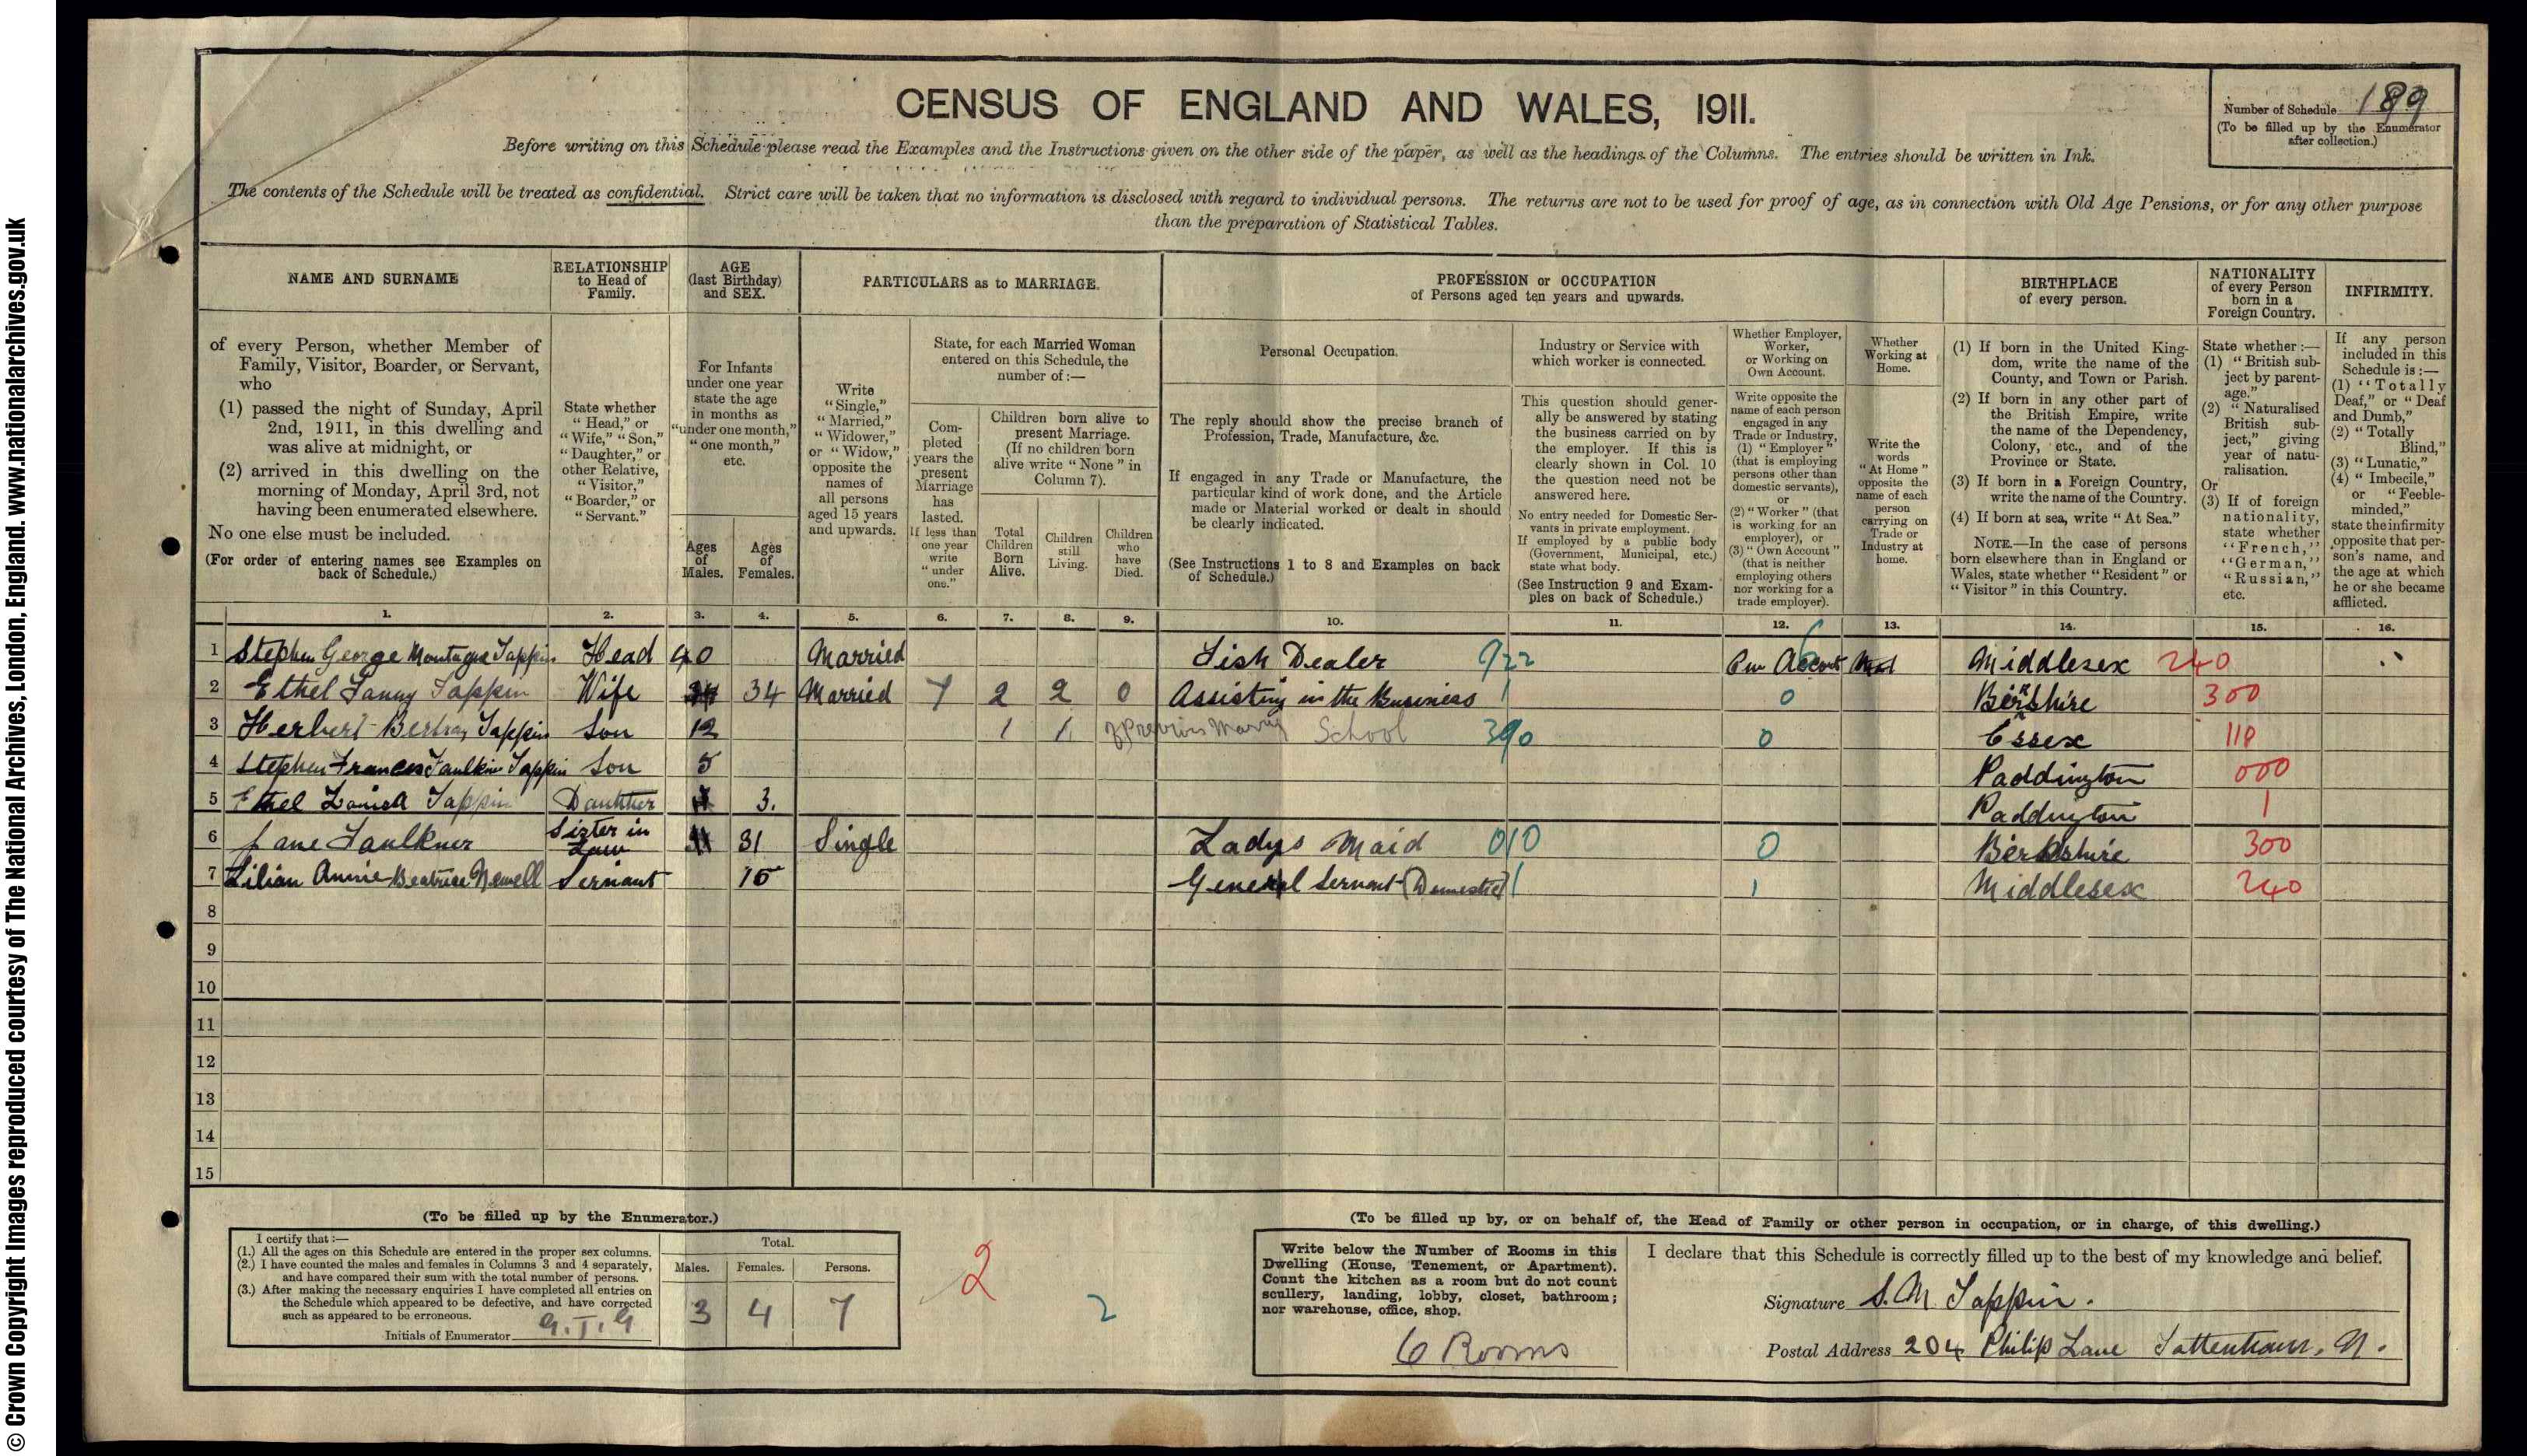 1911: 204  Philip Lane Tottenham, Middlesex